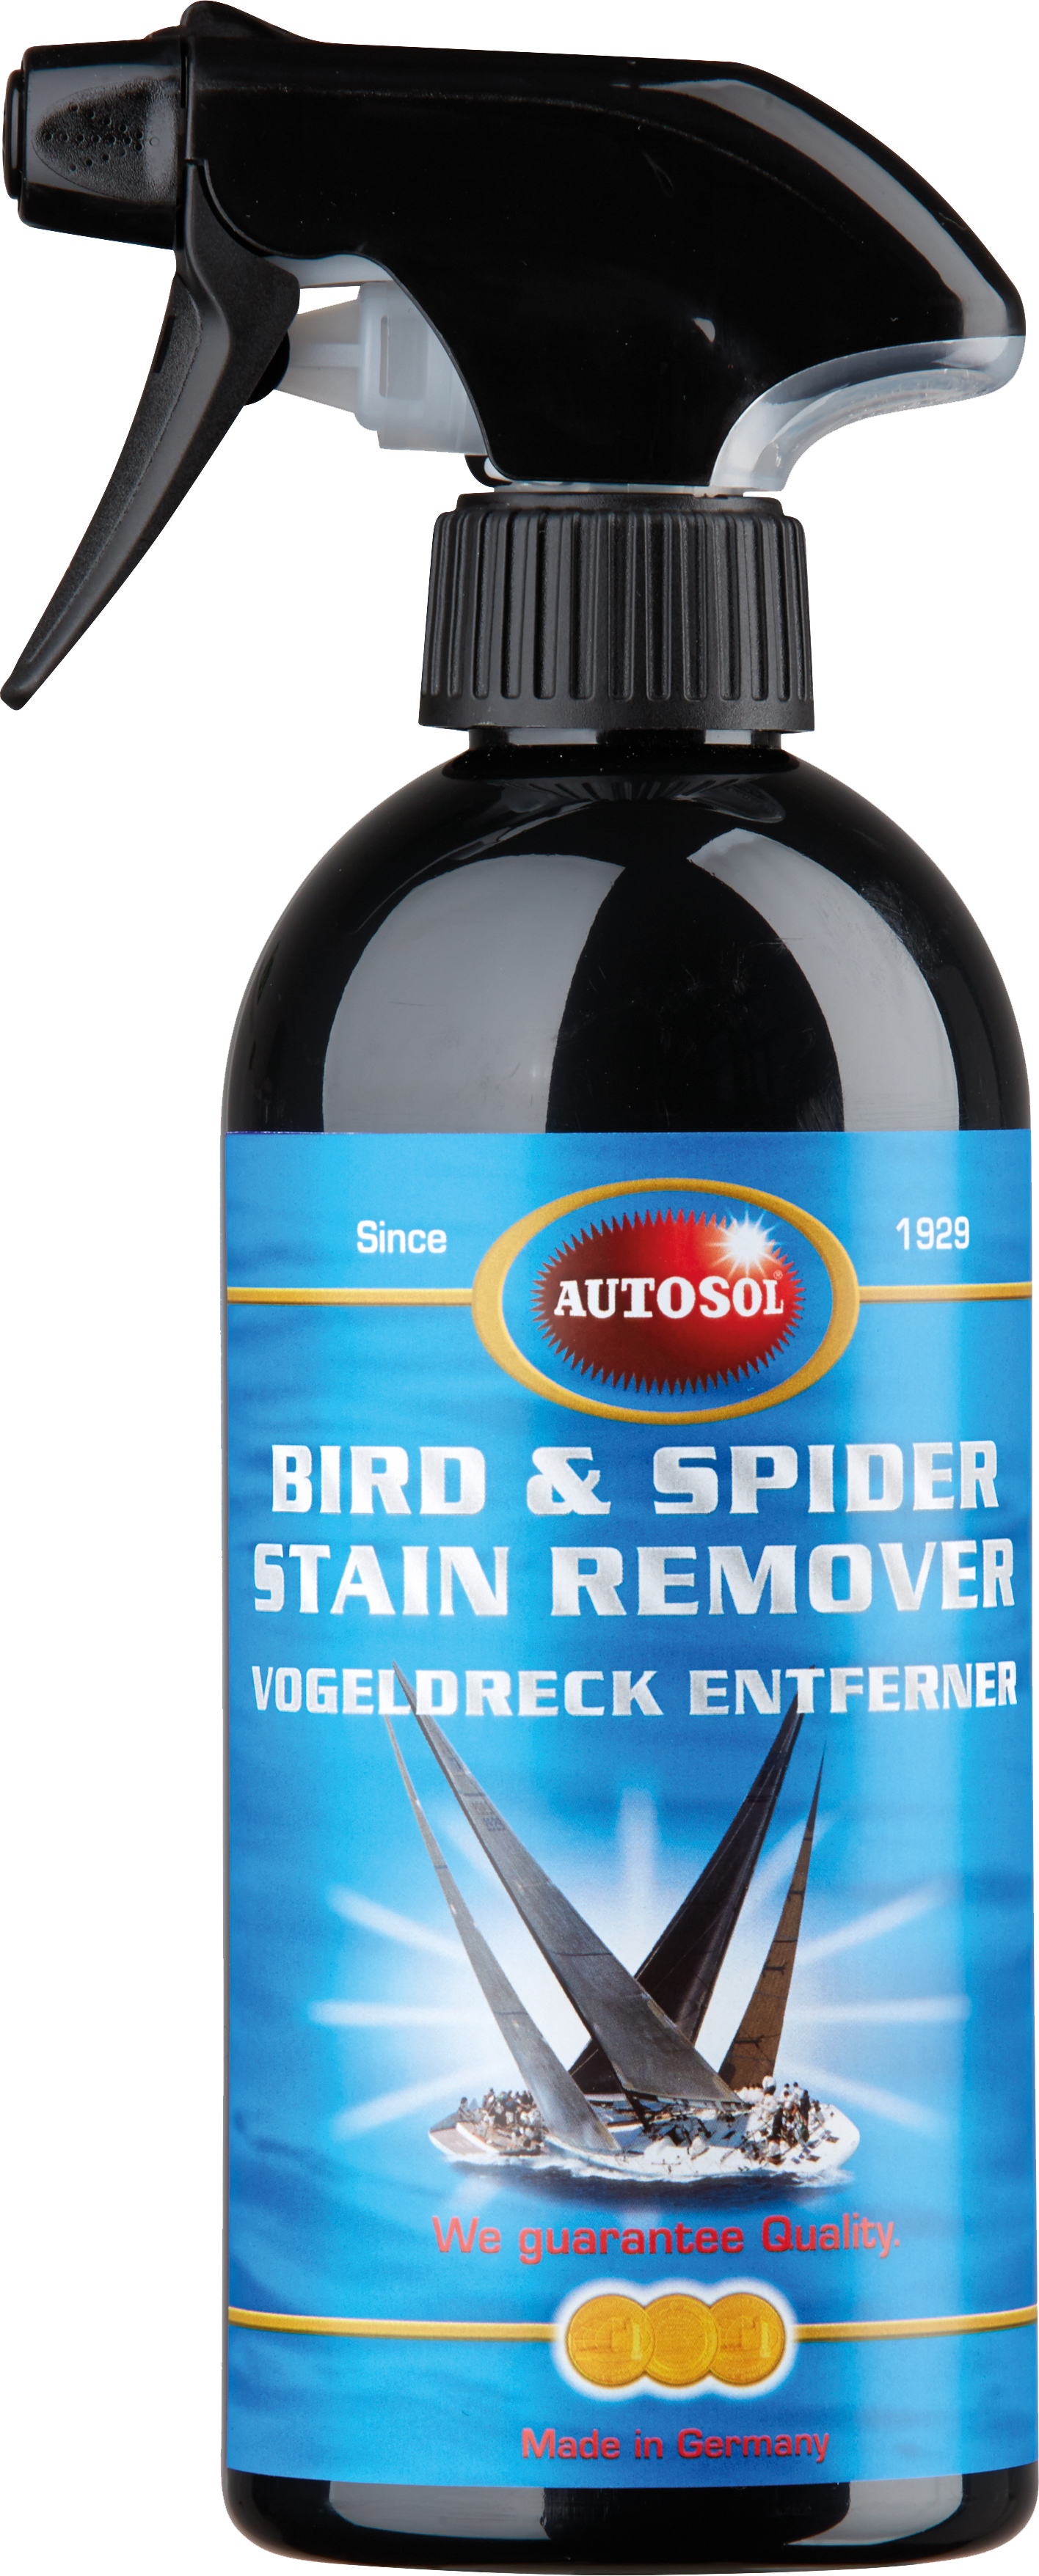 Bird stain remover - Autosol